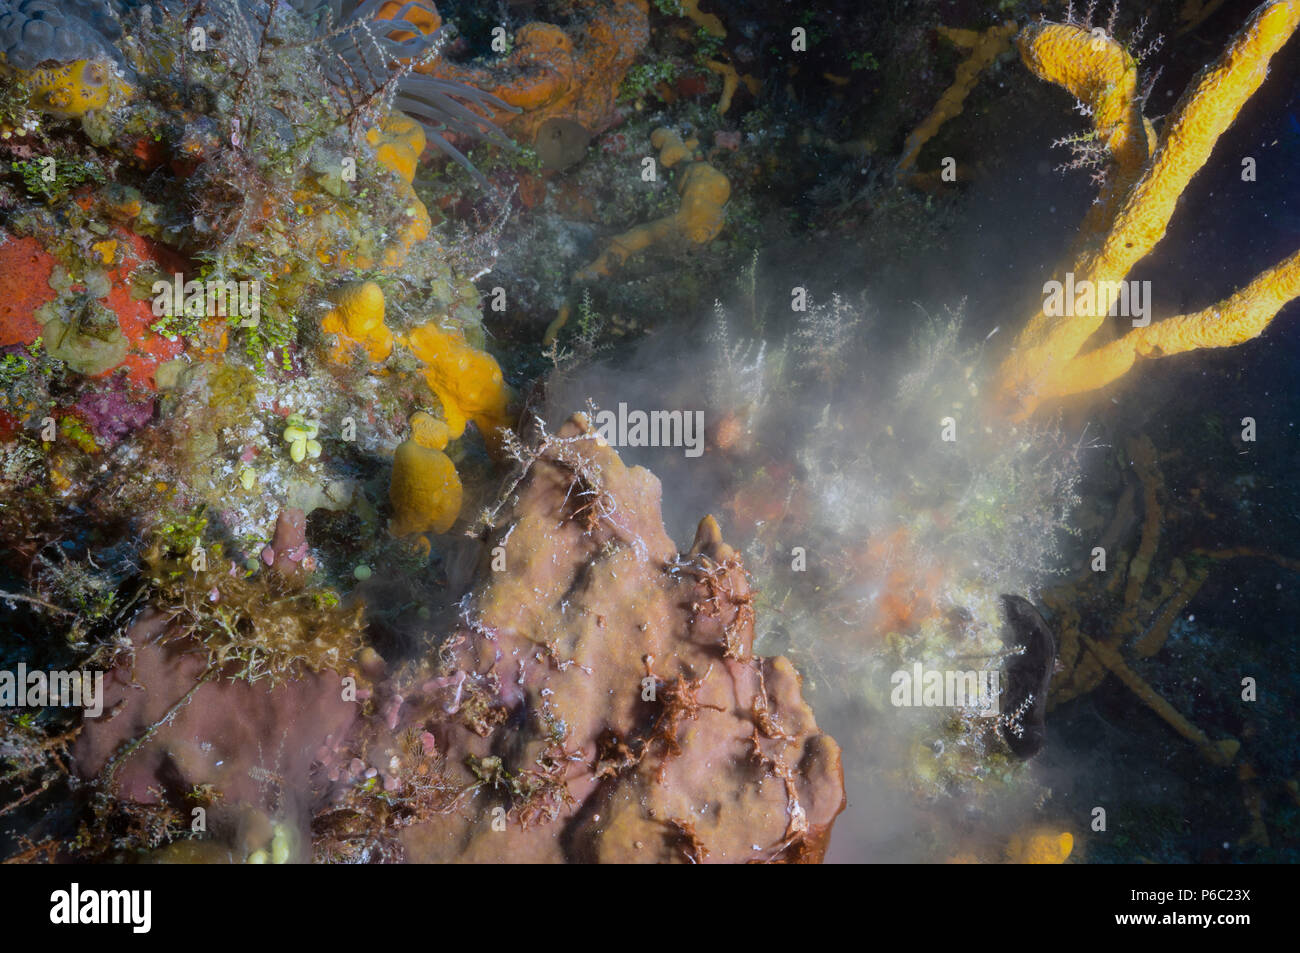 Reef Scene, spawning sponge Stock Photo